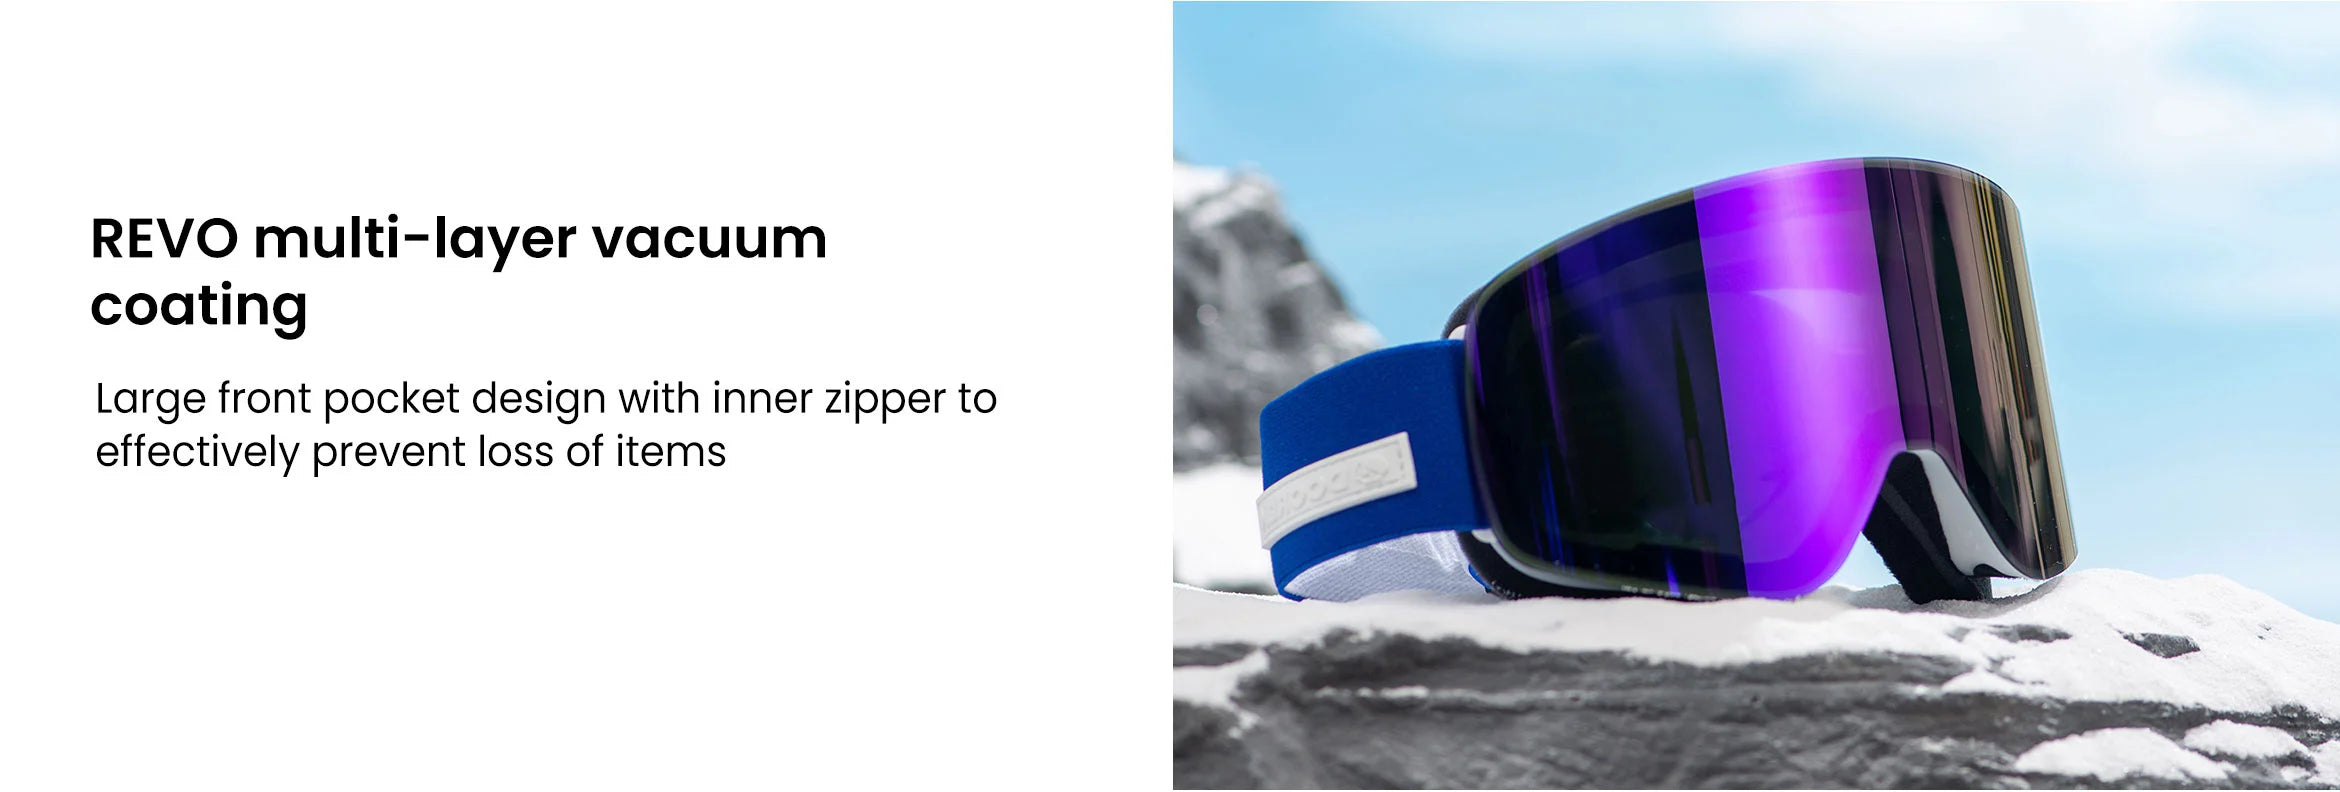 3. Doorek ski goggles - REVO multi-layer vacuum coating